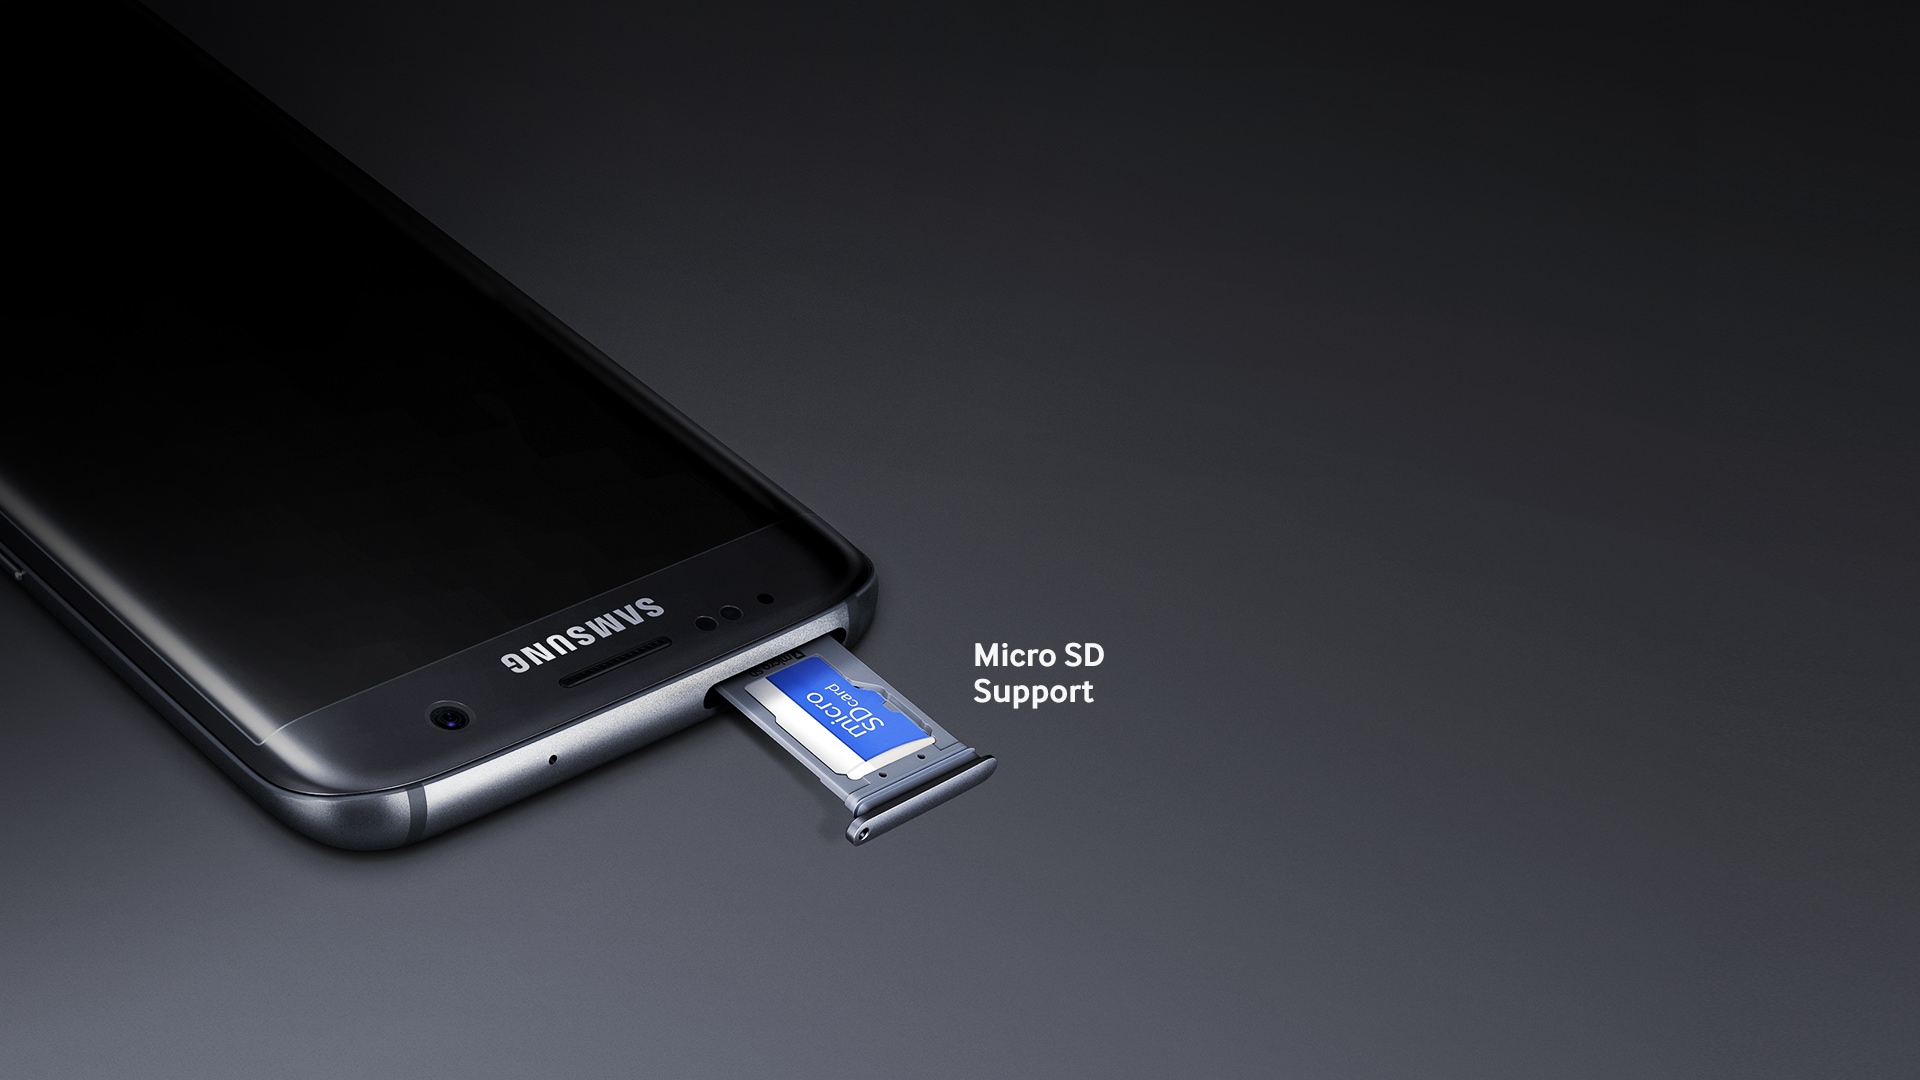 Imagen detallada del Galaxy S7 edge (negro) que muestra una tarjeta microSD dentro de la ranura para tarjeta microSD del dispositivo, junto con el texto “Compatible con microSD”.